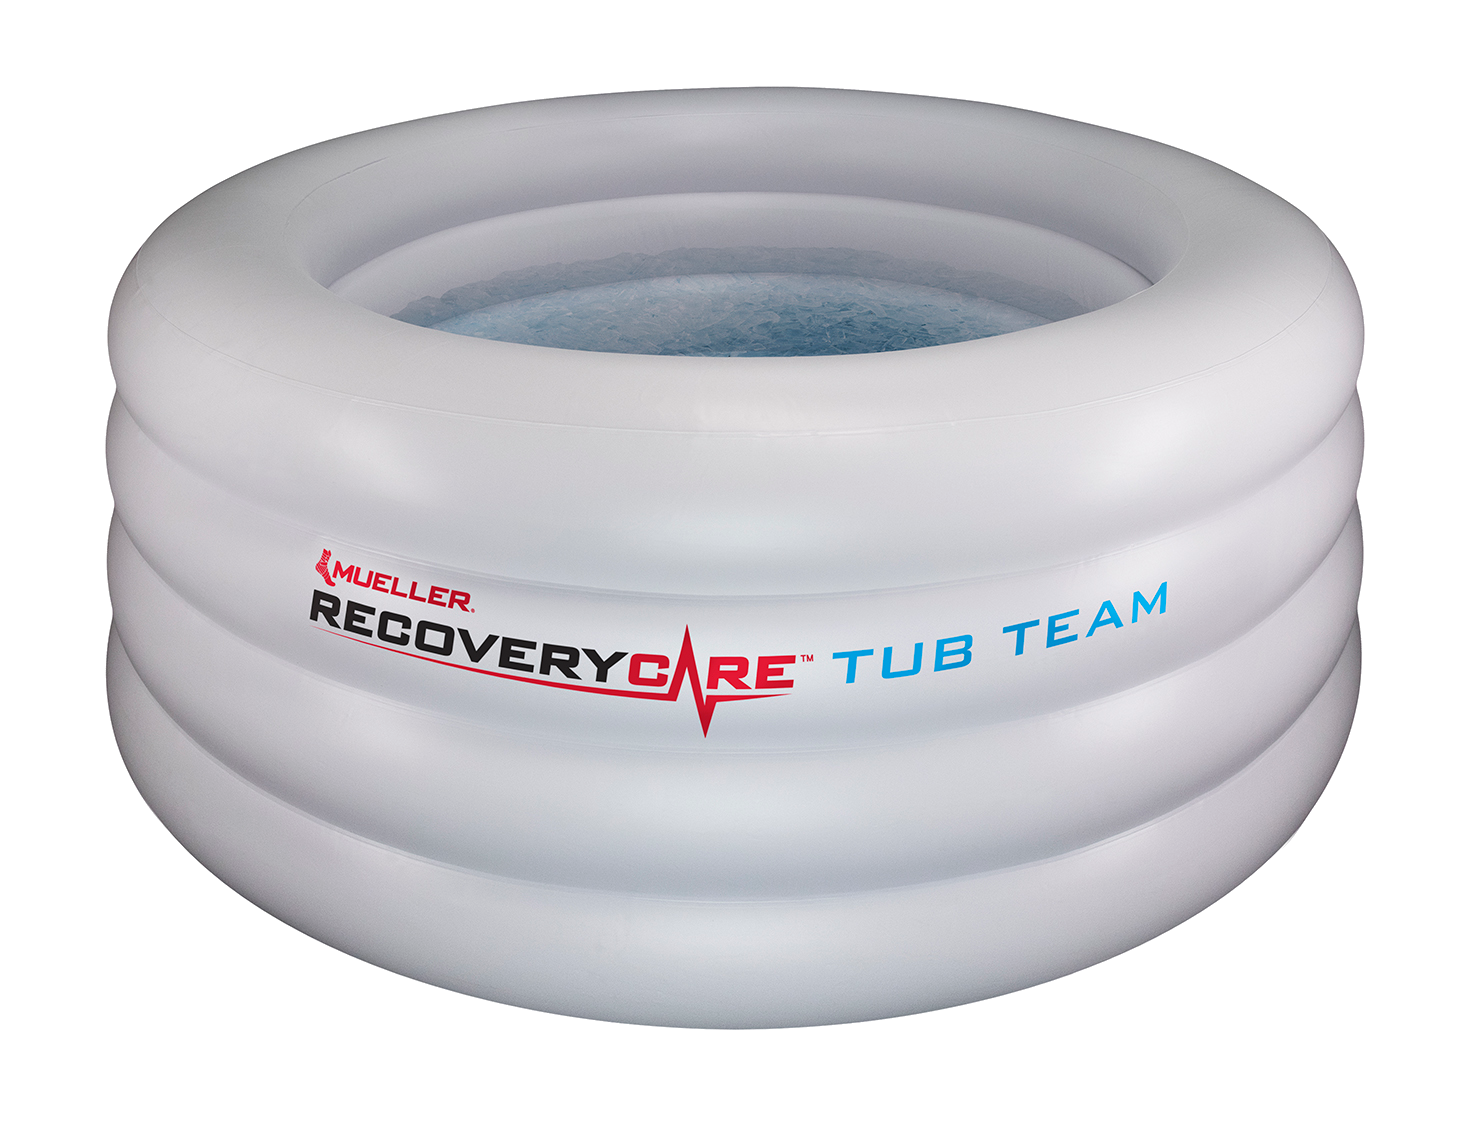 Mueller Recovery Care Team Tub Regenerationsbecken frontal